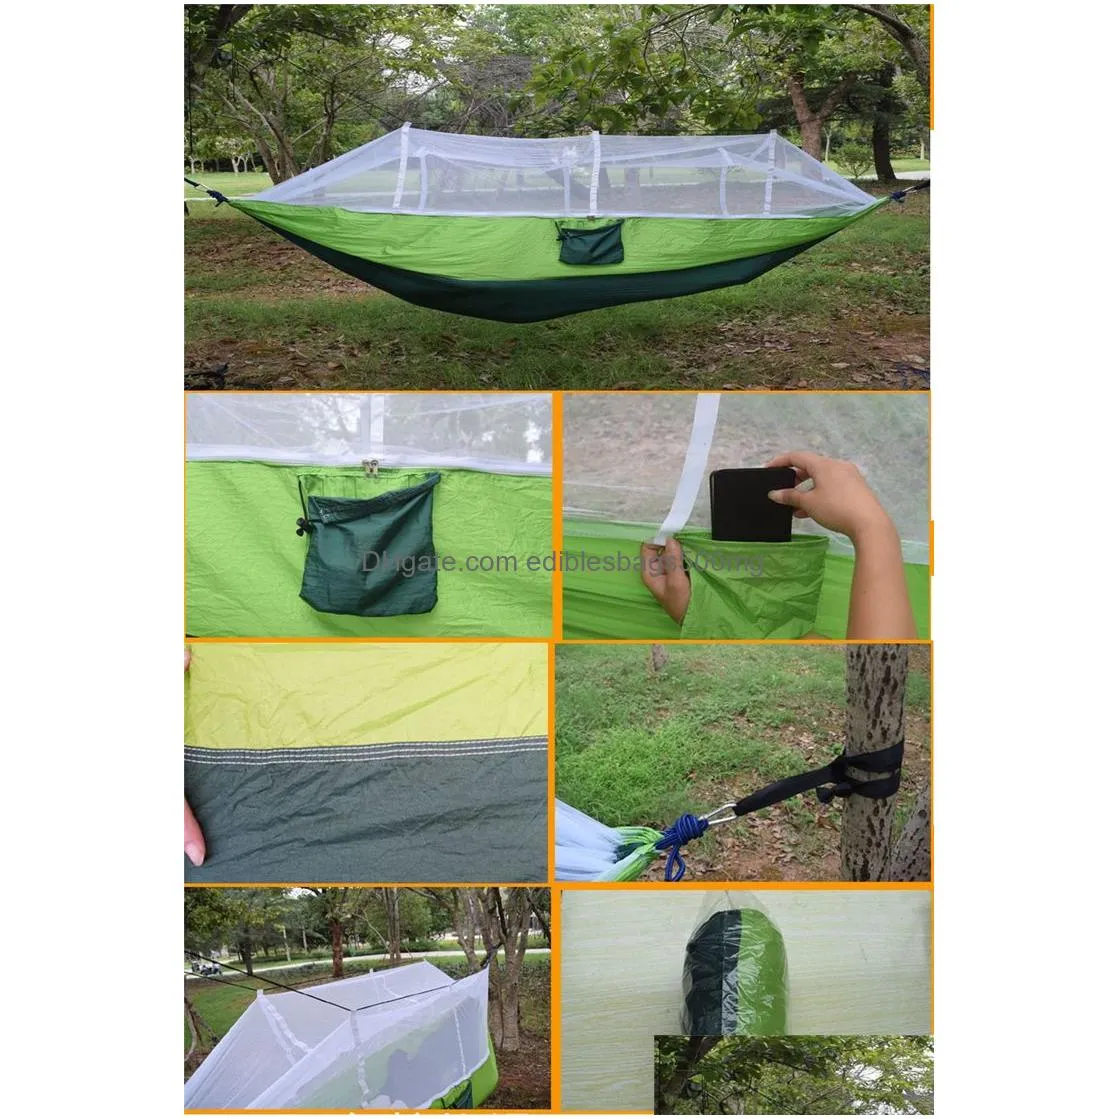  sttyle mosquito net hammock outdoor parachute cloth field outdoor hammock garden camping wobble hanging bed t5i112